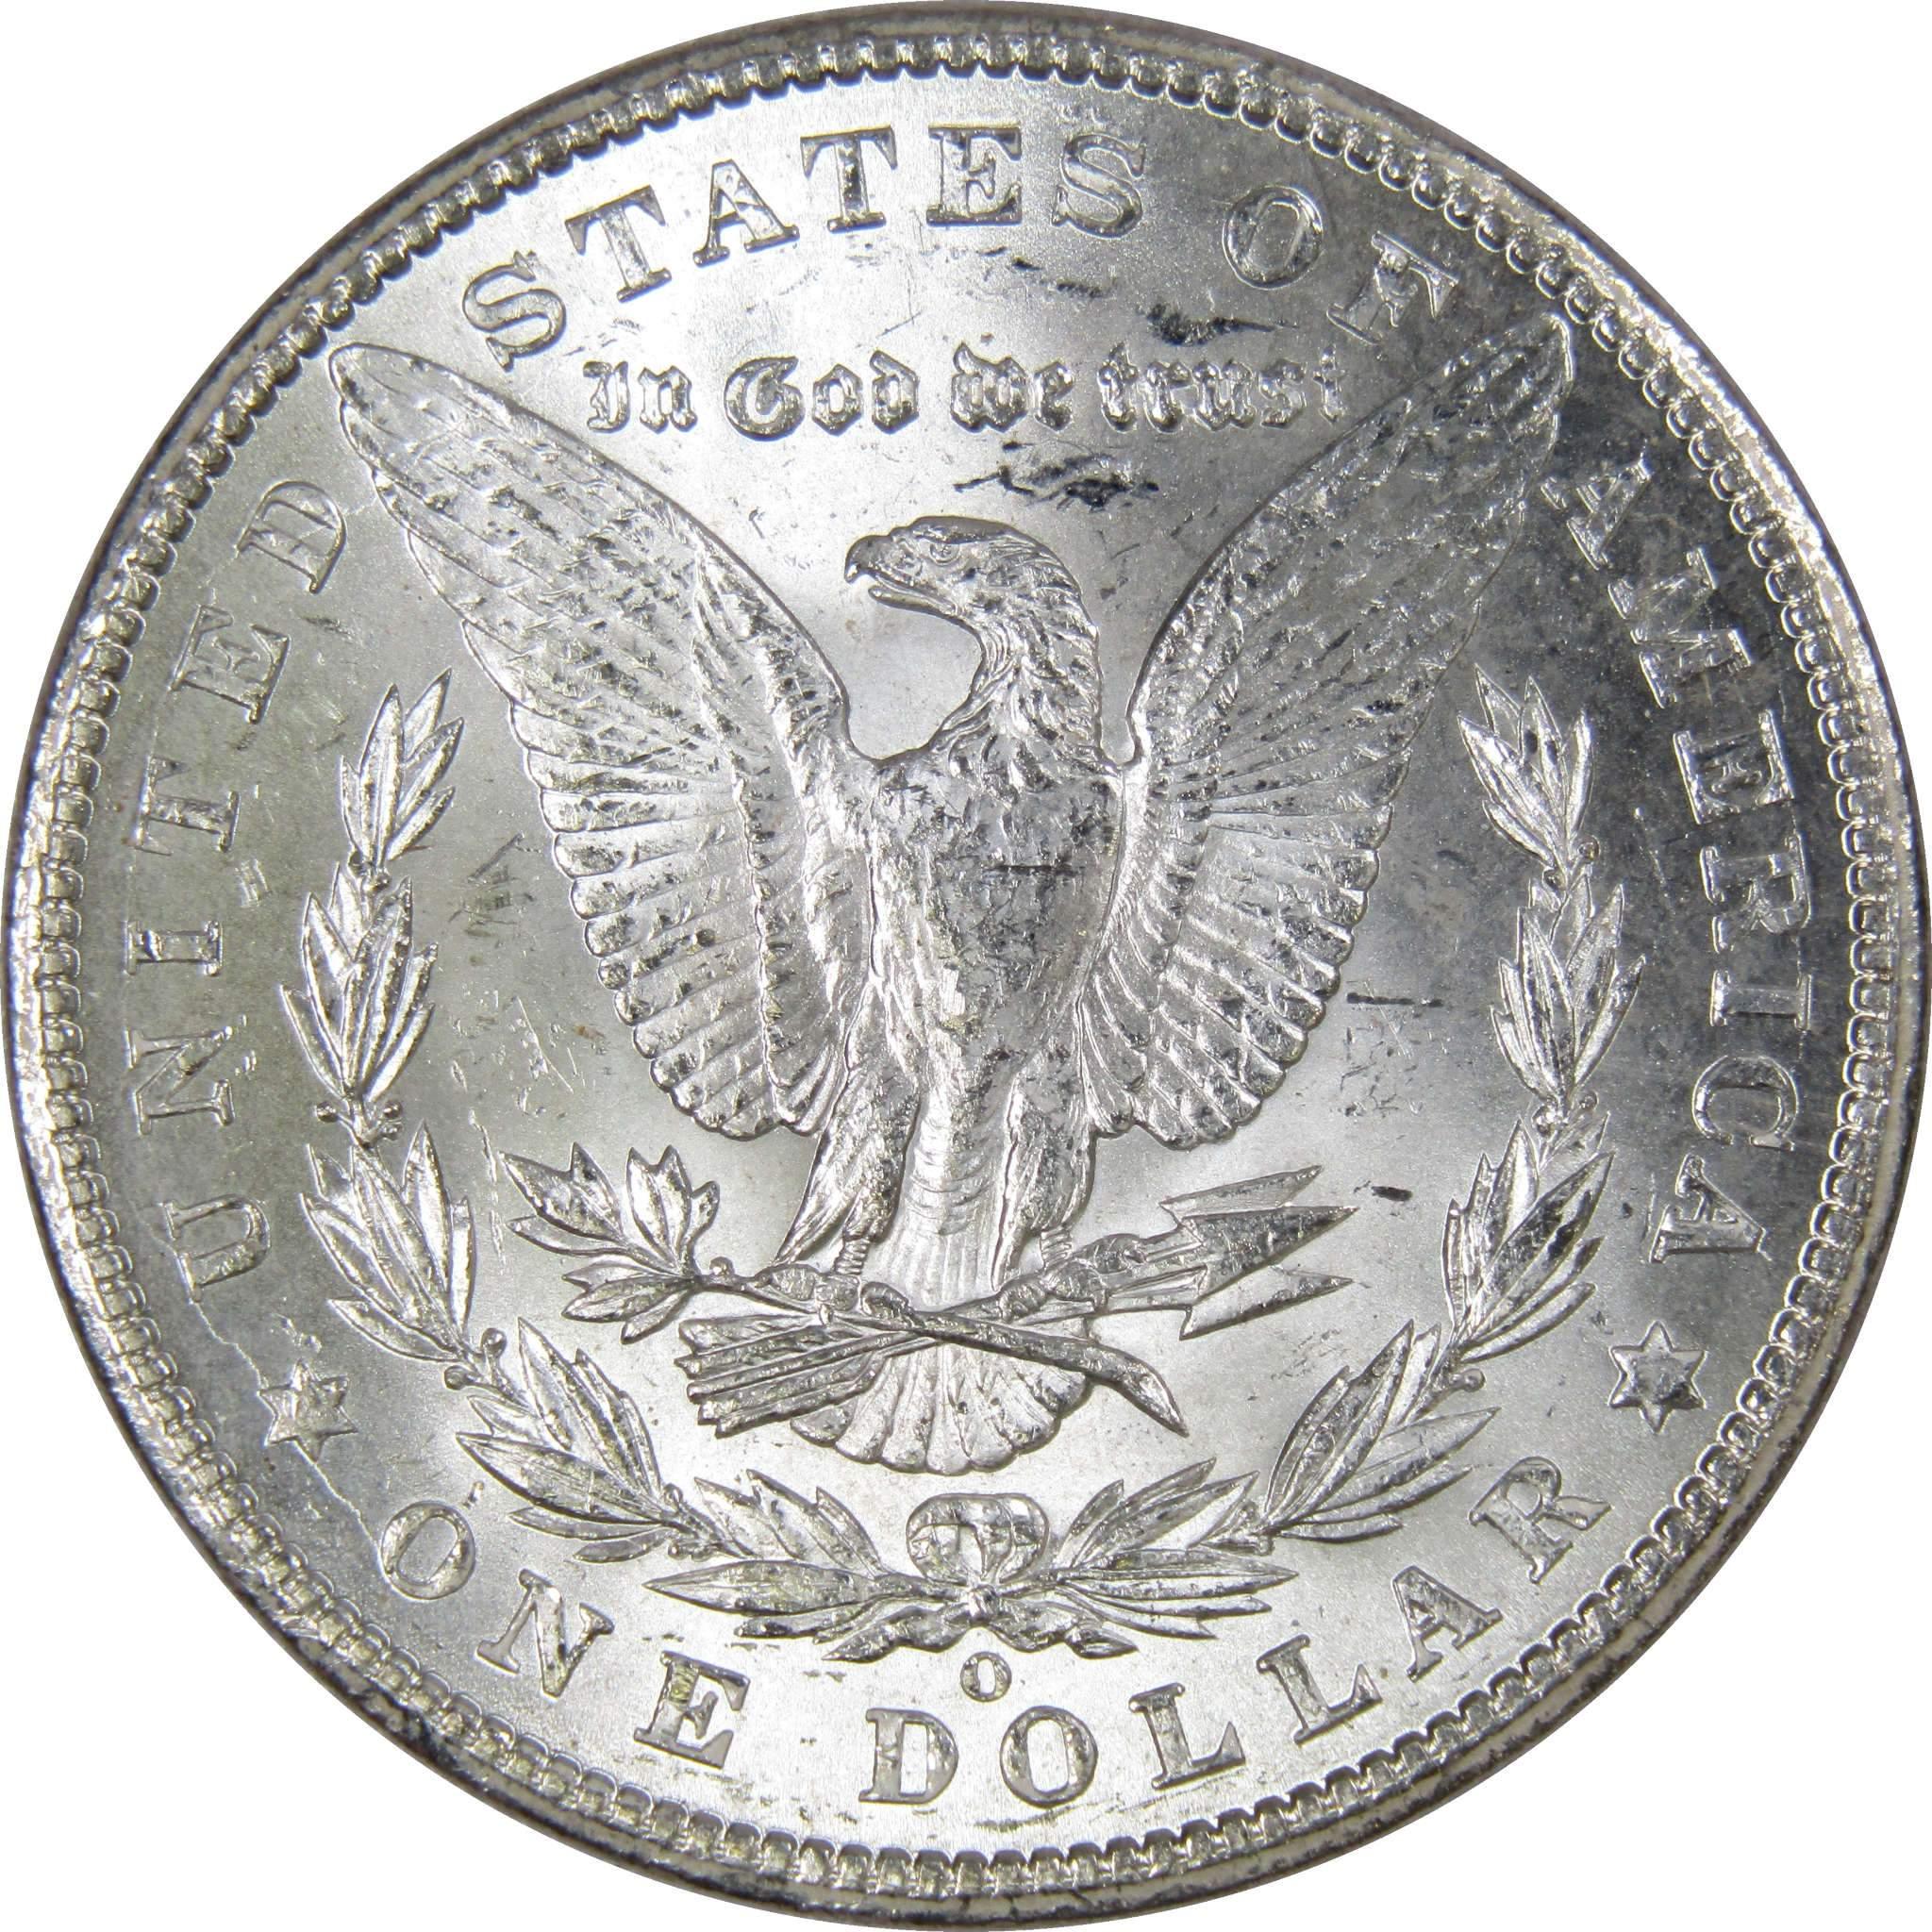 1902 O Morgan Dollar BU Choice Uncirculated Mint State 90% Silver $1 US Coin - Morgan coin - Morgan silver dollar - Morgan silver dollar for sale - Profile Coins &amp; Collectibles